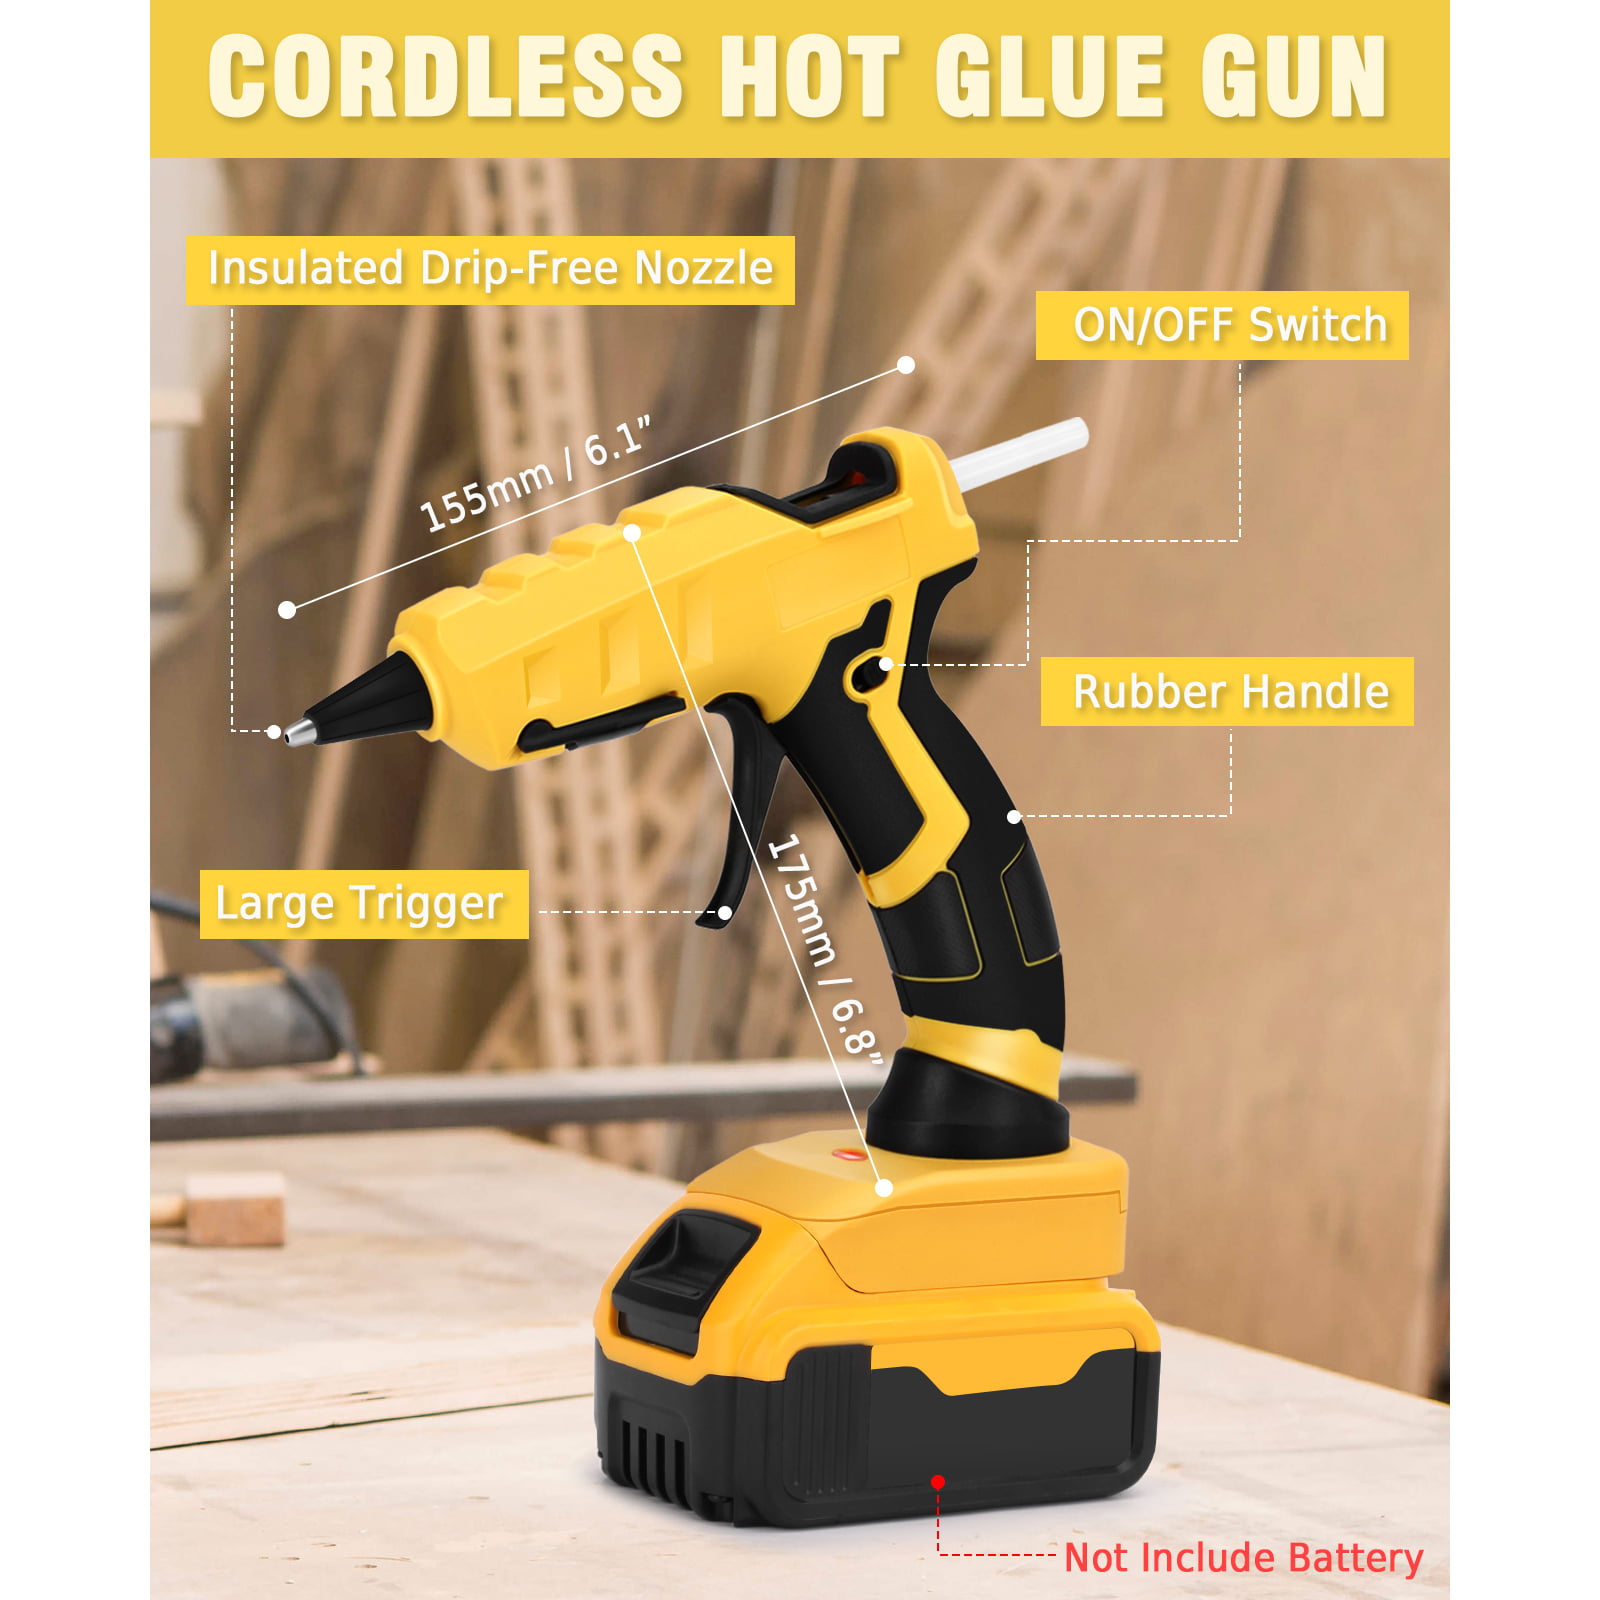  Cordless Hot Glue Gun for Milwaukee 18V M18 Battery, Hot Glue  Gun Kit for Milwaukee Tools in Crafting, Wood, PVC, Glass, Home Repair with  30 Pcs 0.27 * 5.9 inch Hot